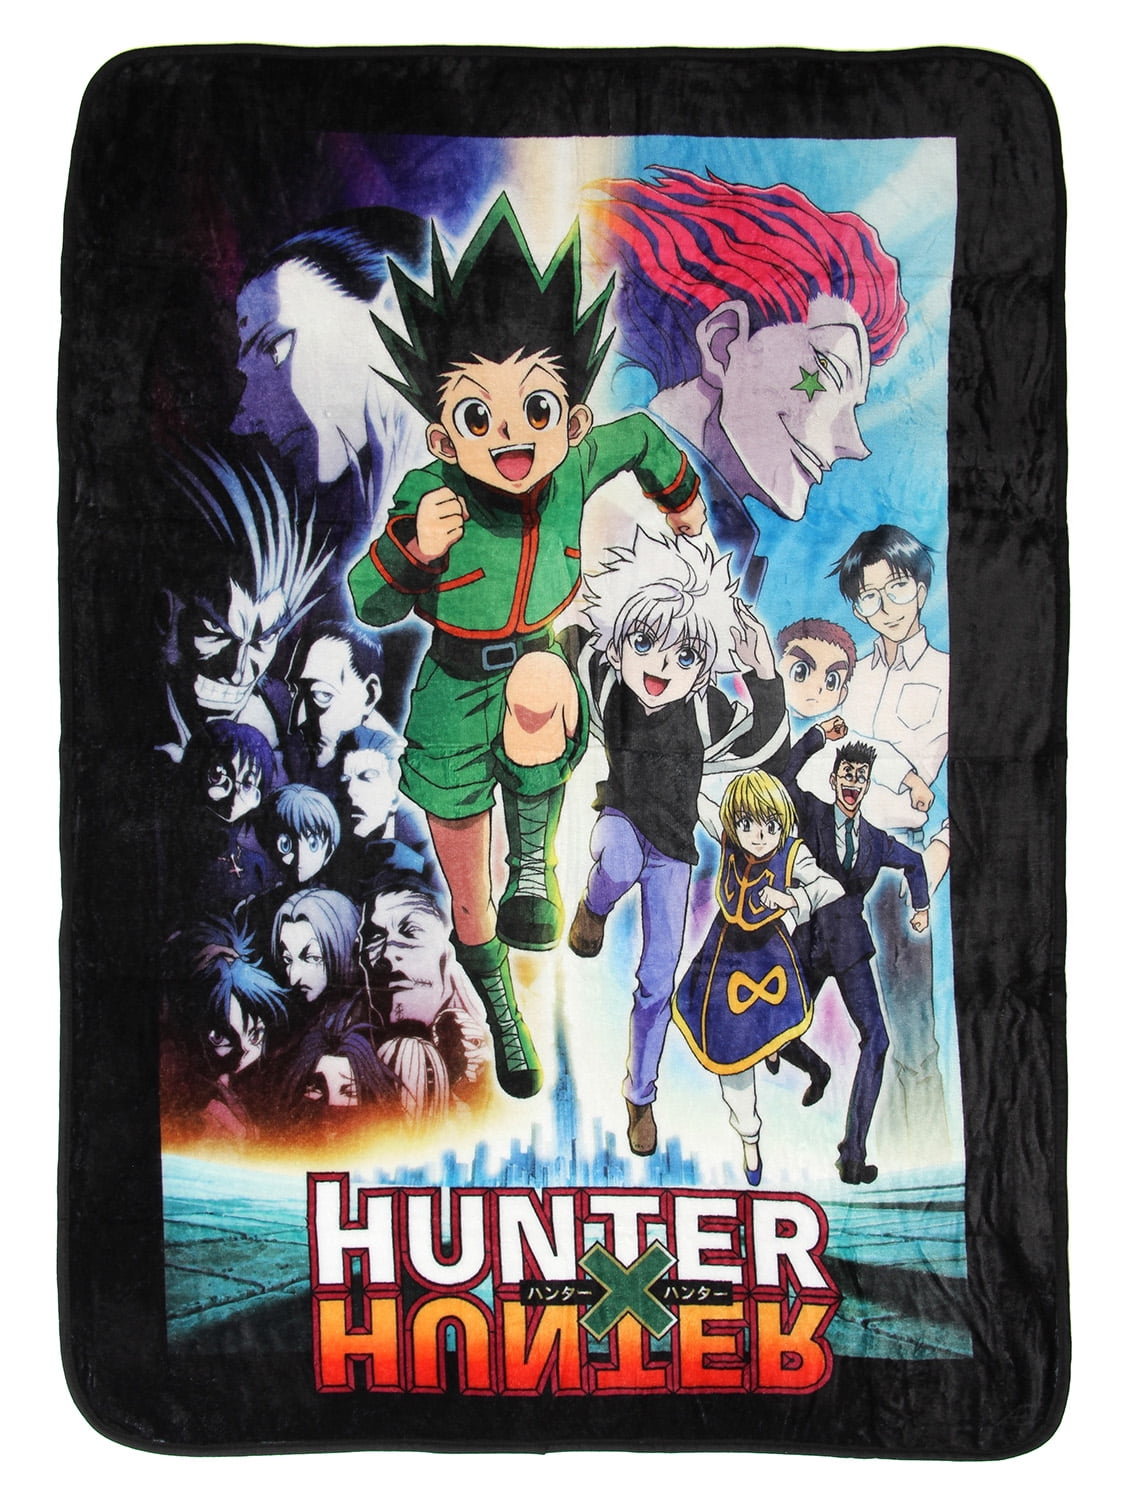  Hunter x Hunter Gon Freecss & Killua Throw Blanket 45